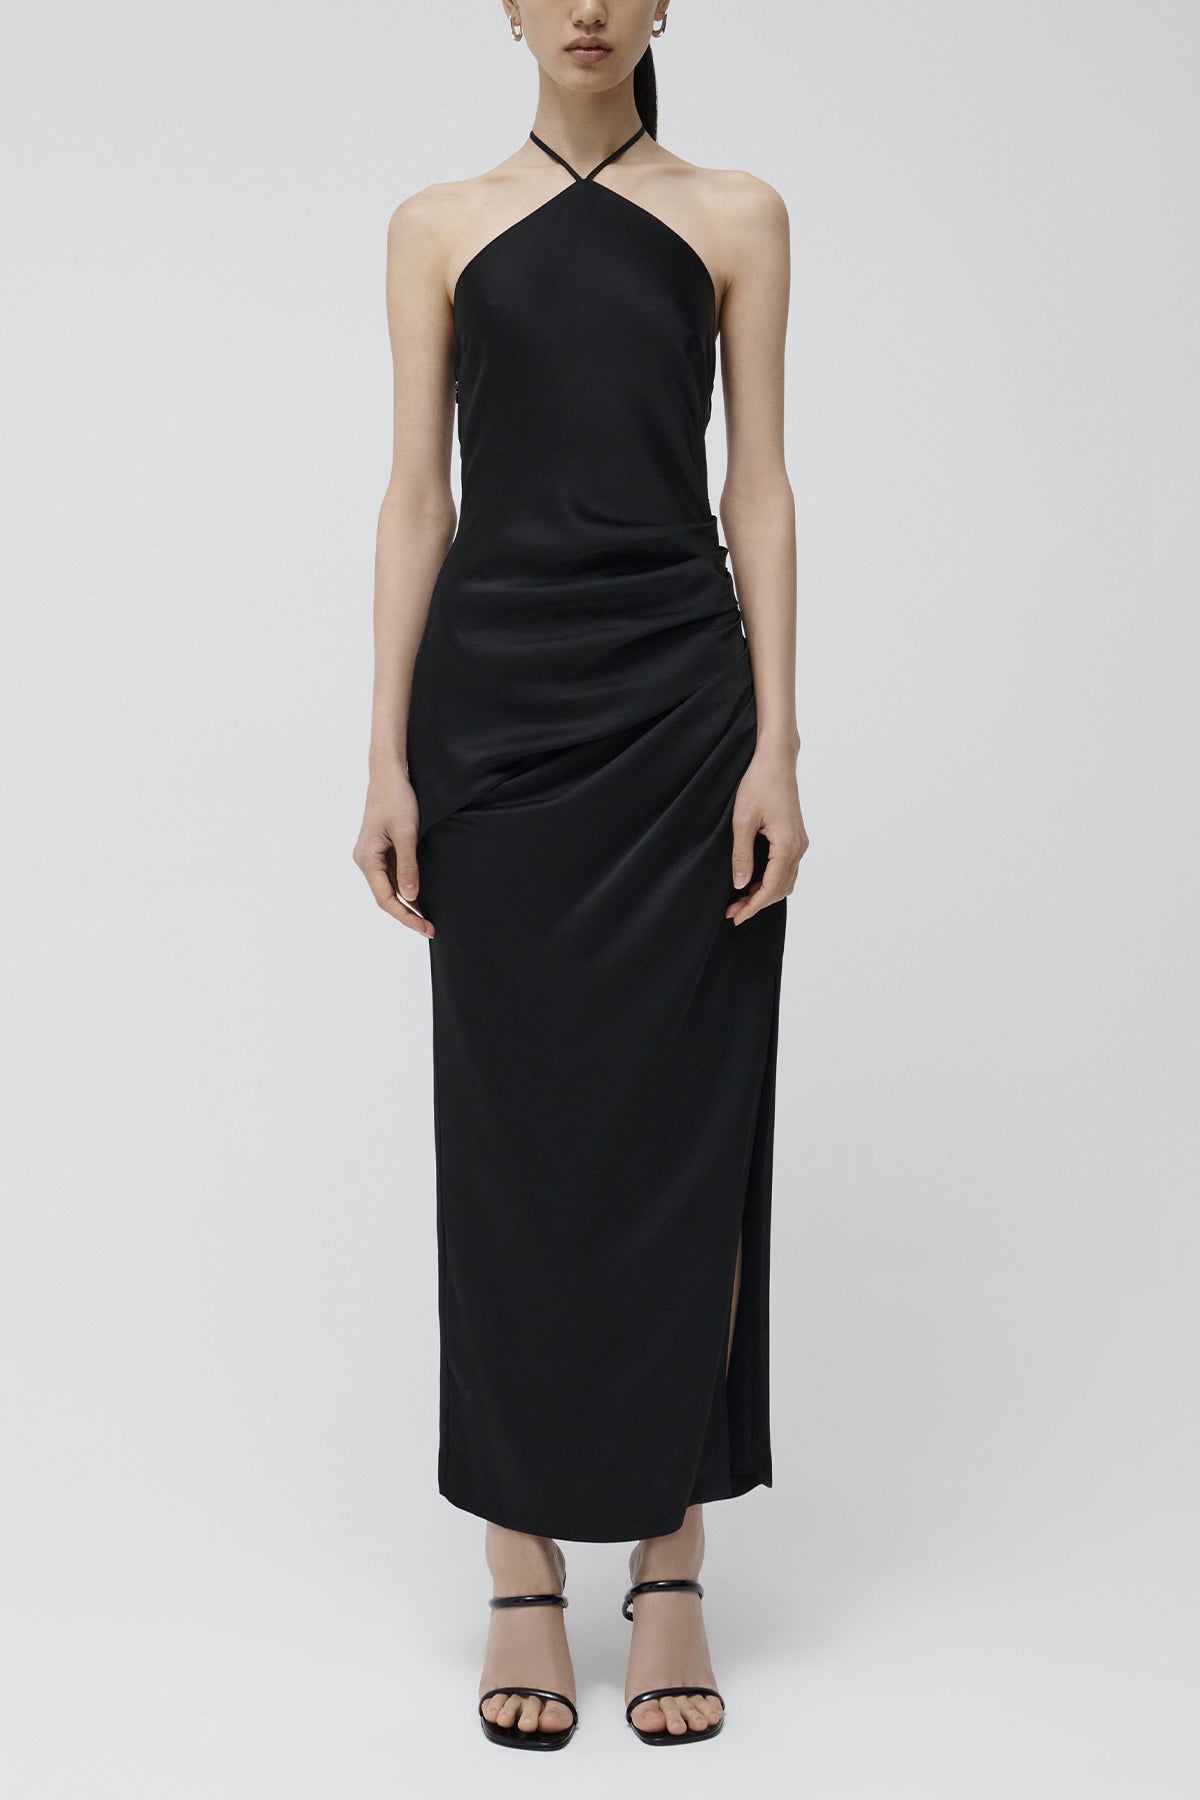 Hansel Gown in Black - shop-olivia.com